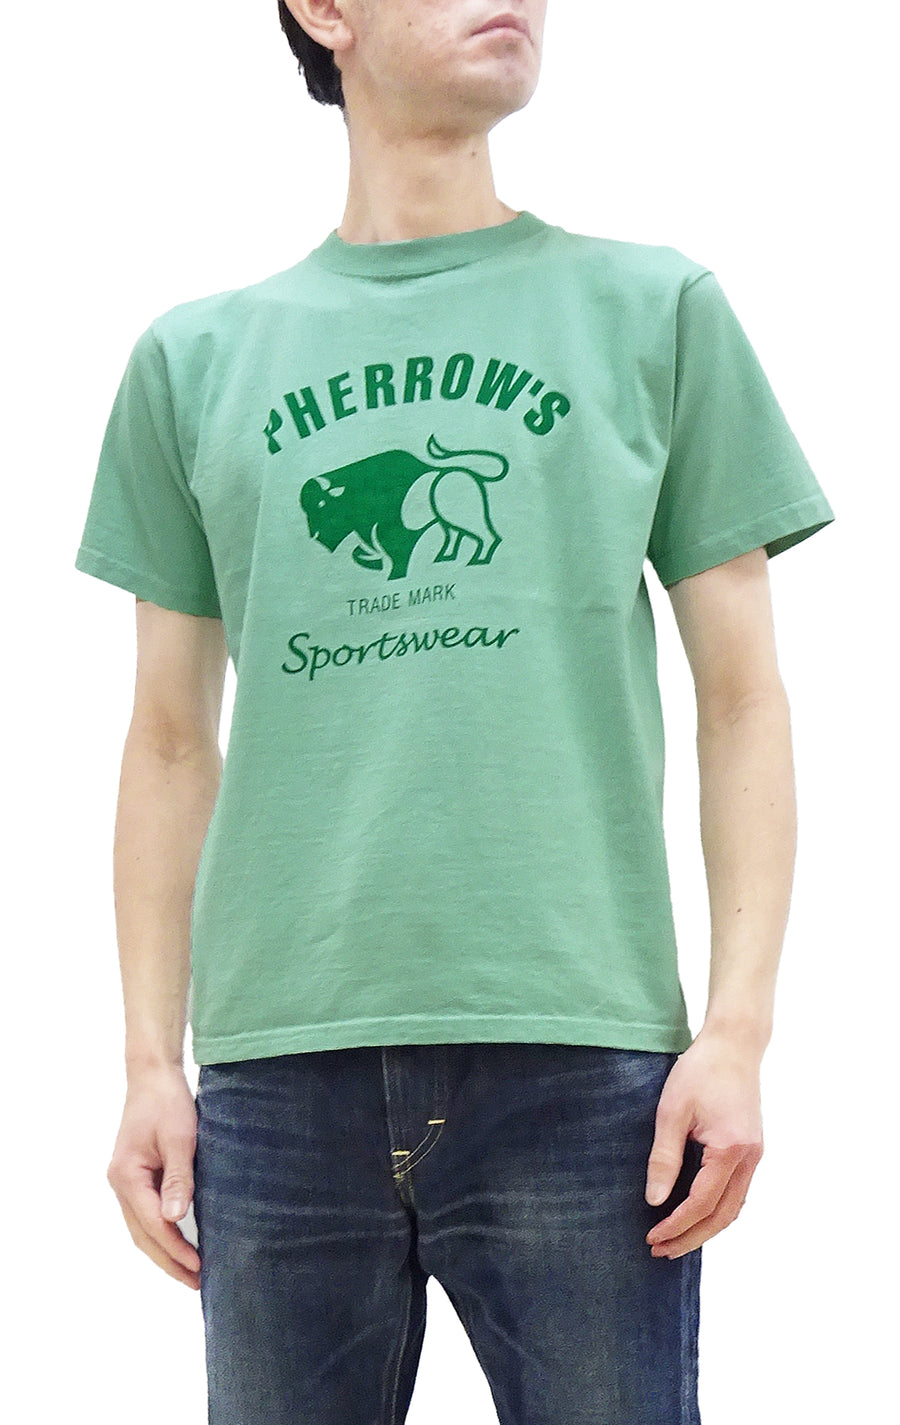 Pherrows T-Shirt Men's Short Sleeve Buffalo Graphic Print Tee Pherrow's 24S-PT2 Mint Green